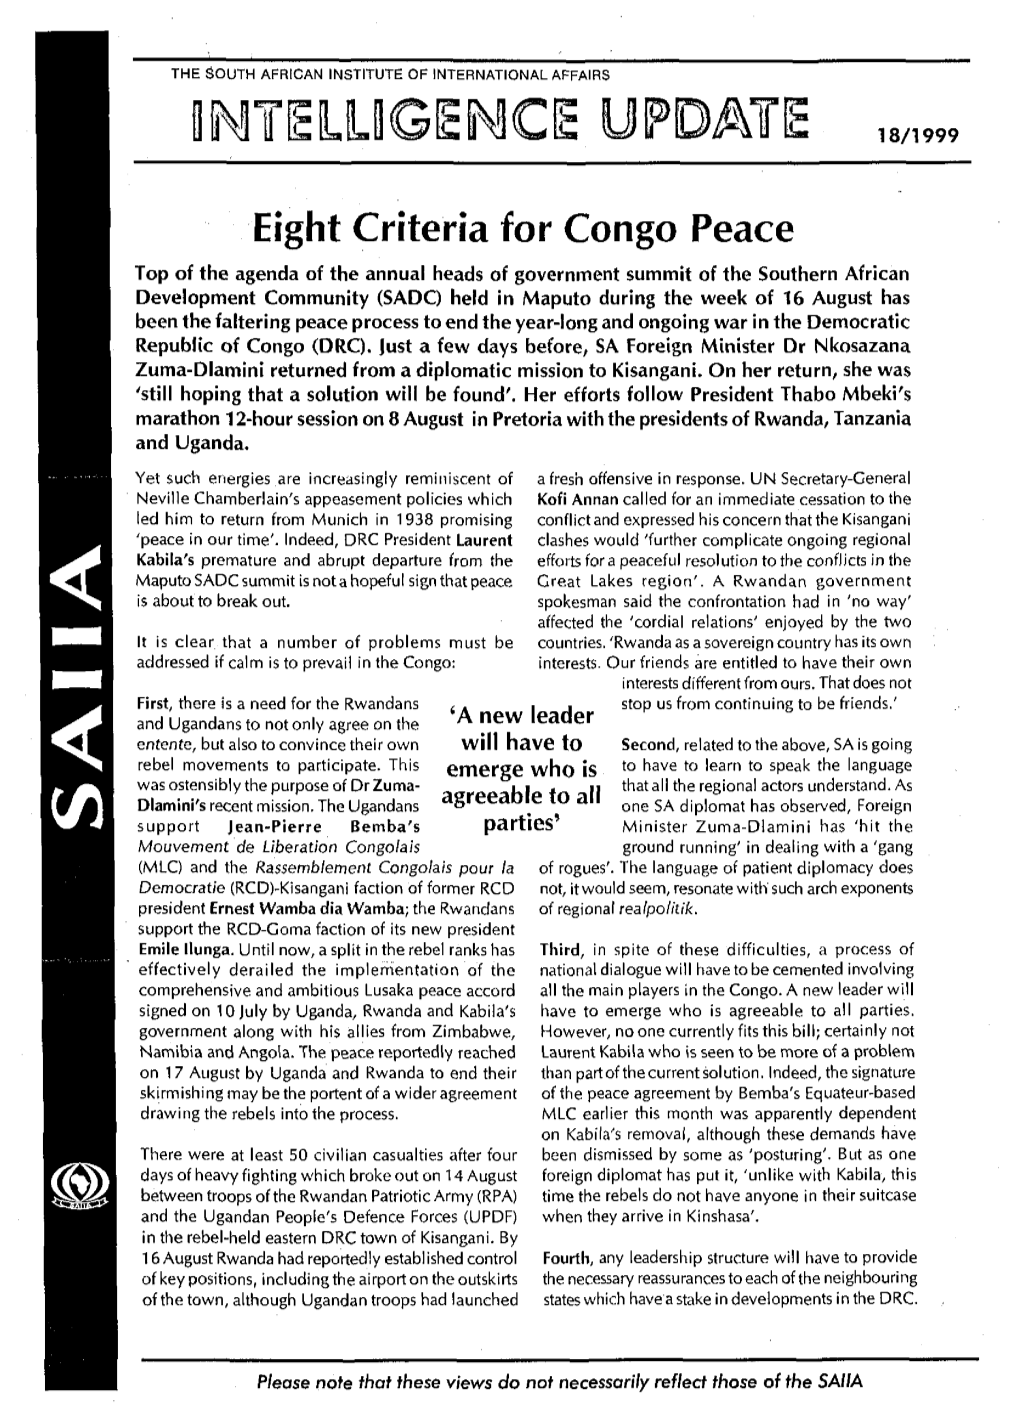 Eight Criteria for Congo Peace